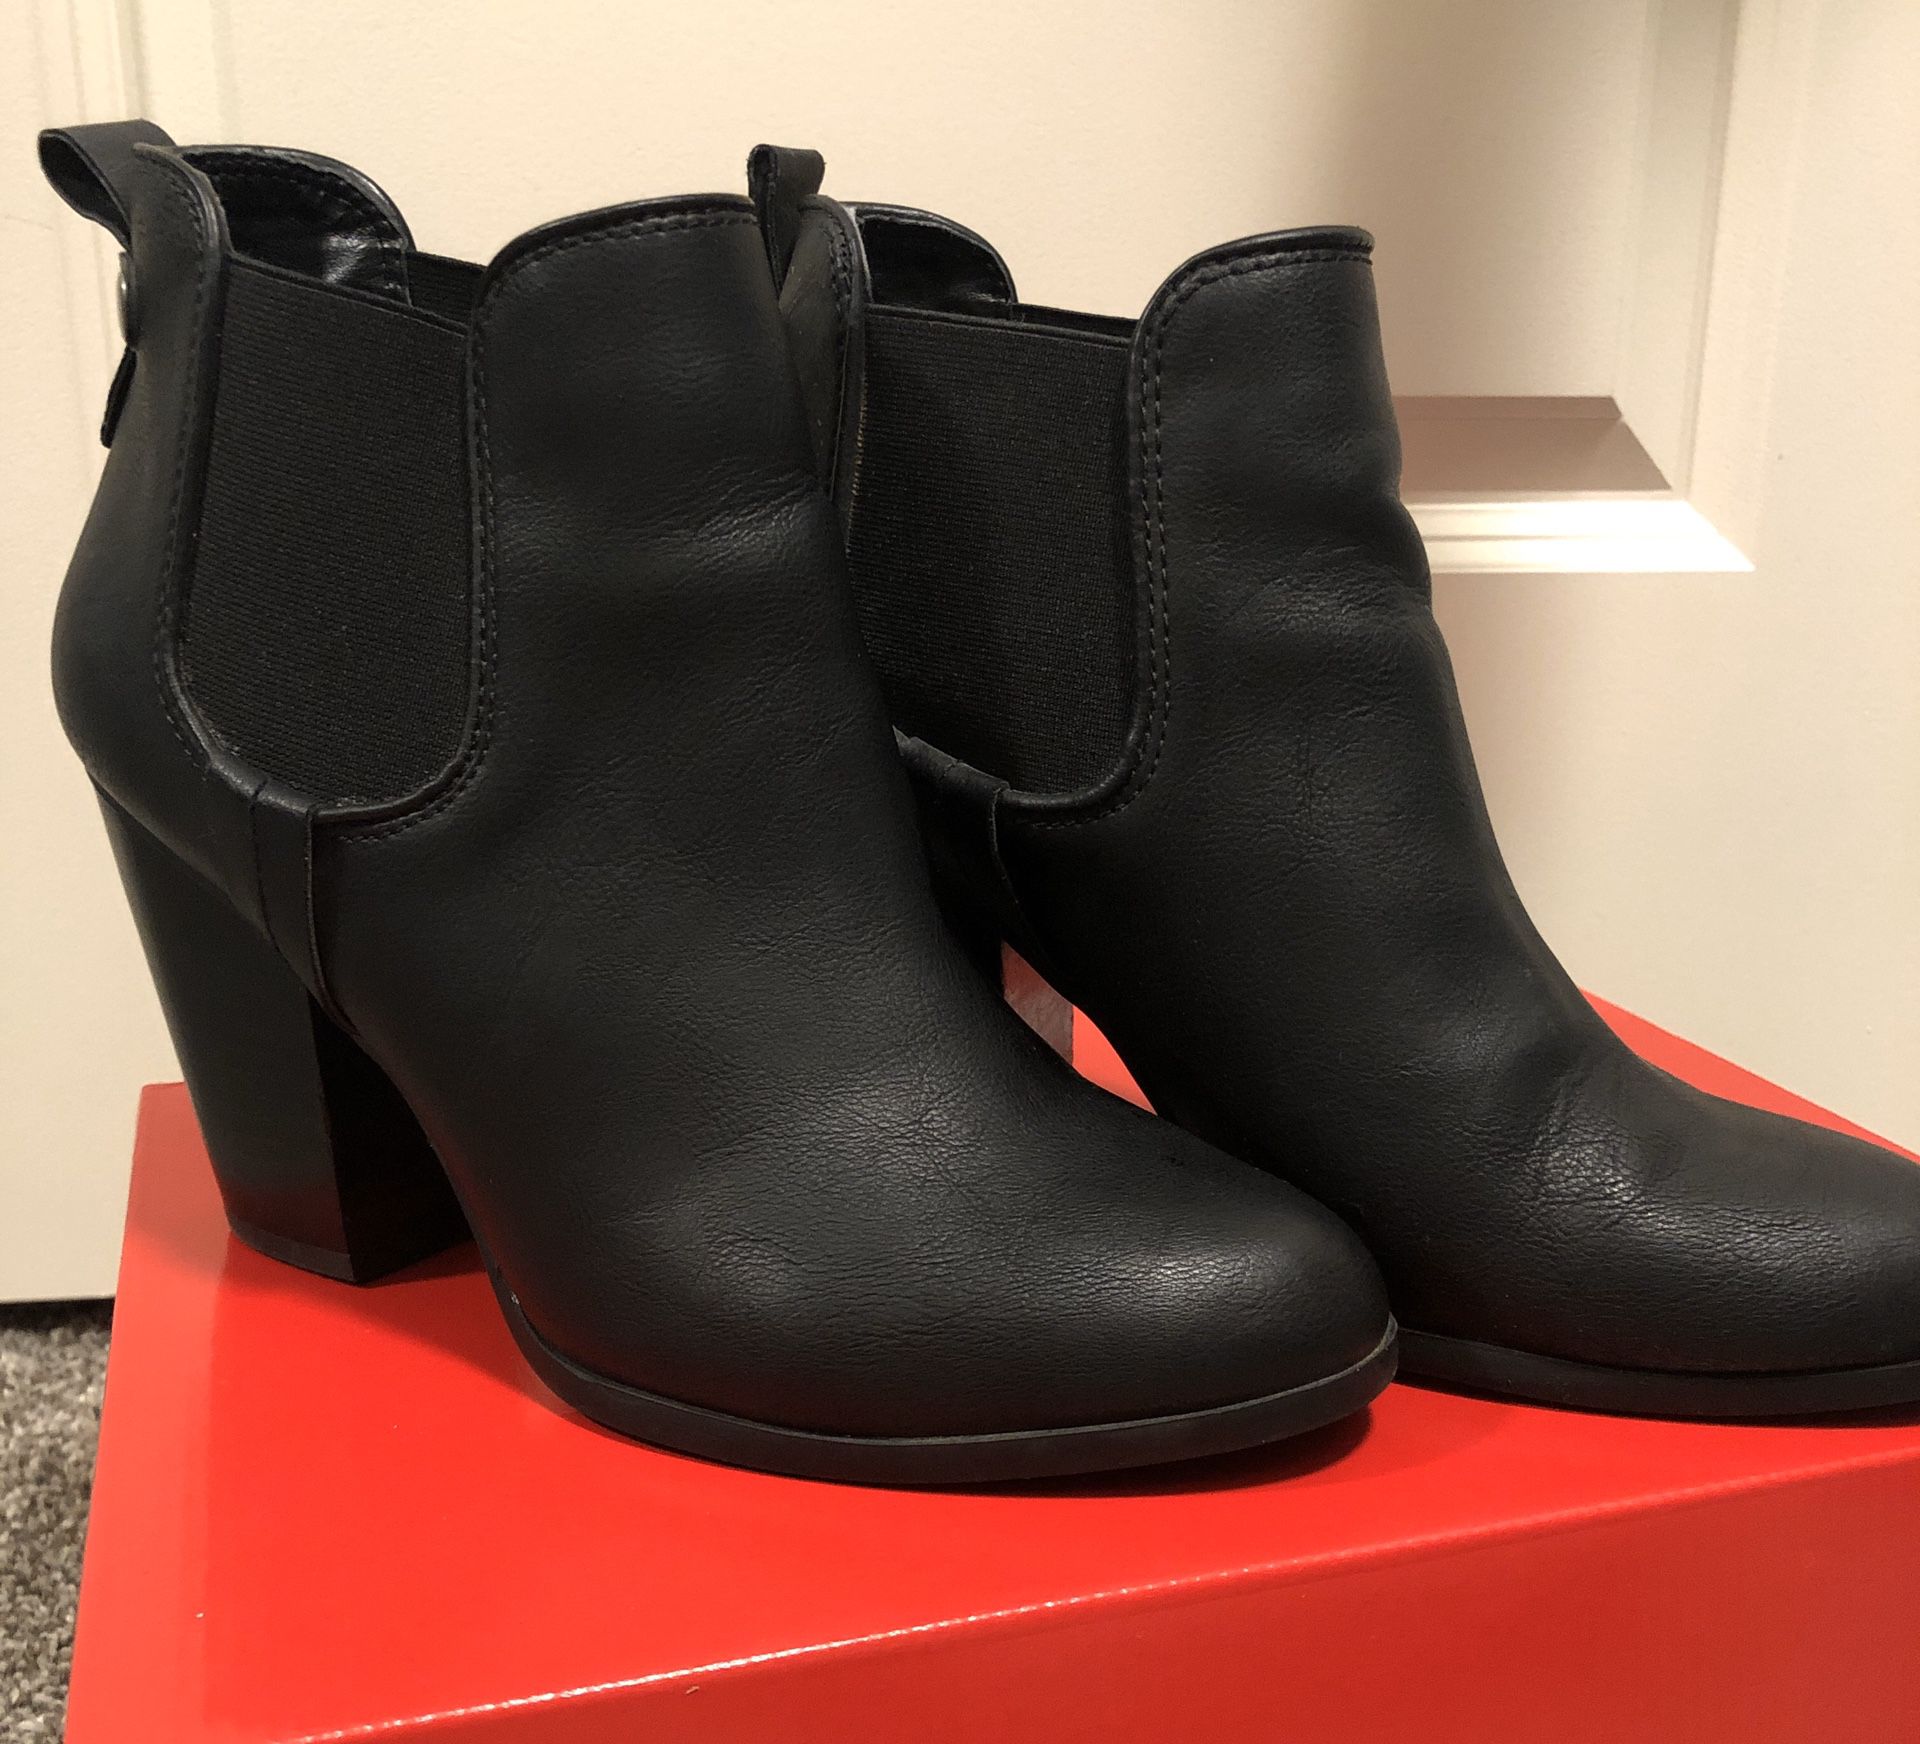 Women’s Carlos Santana Boots (Size 9)